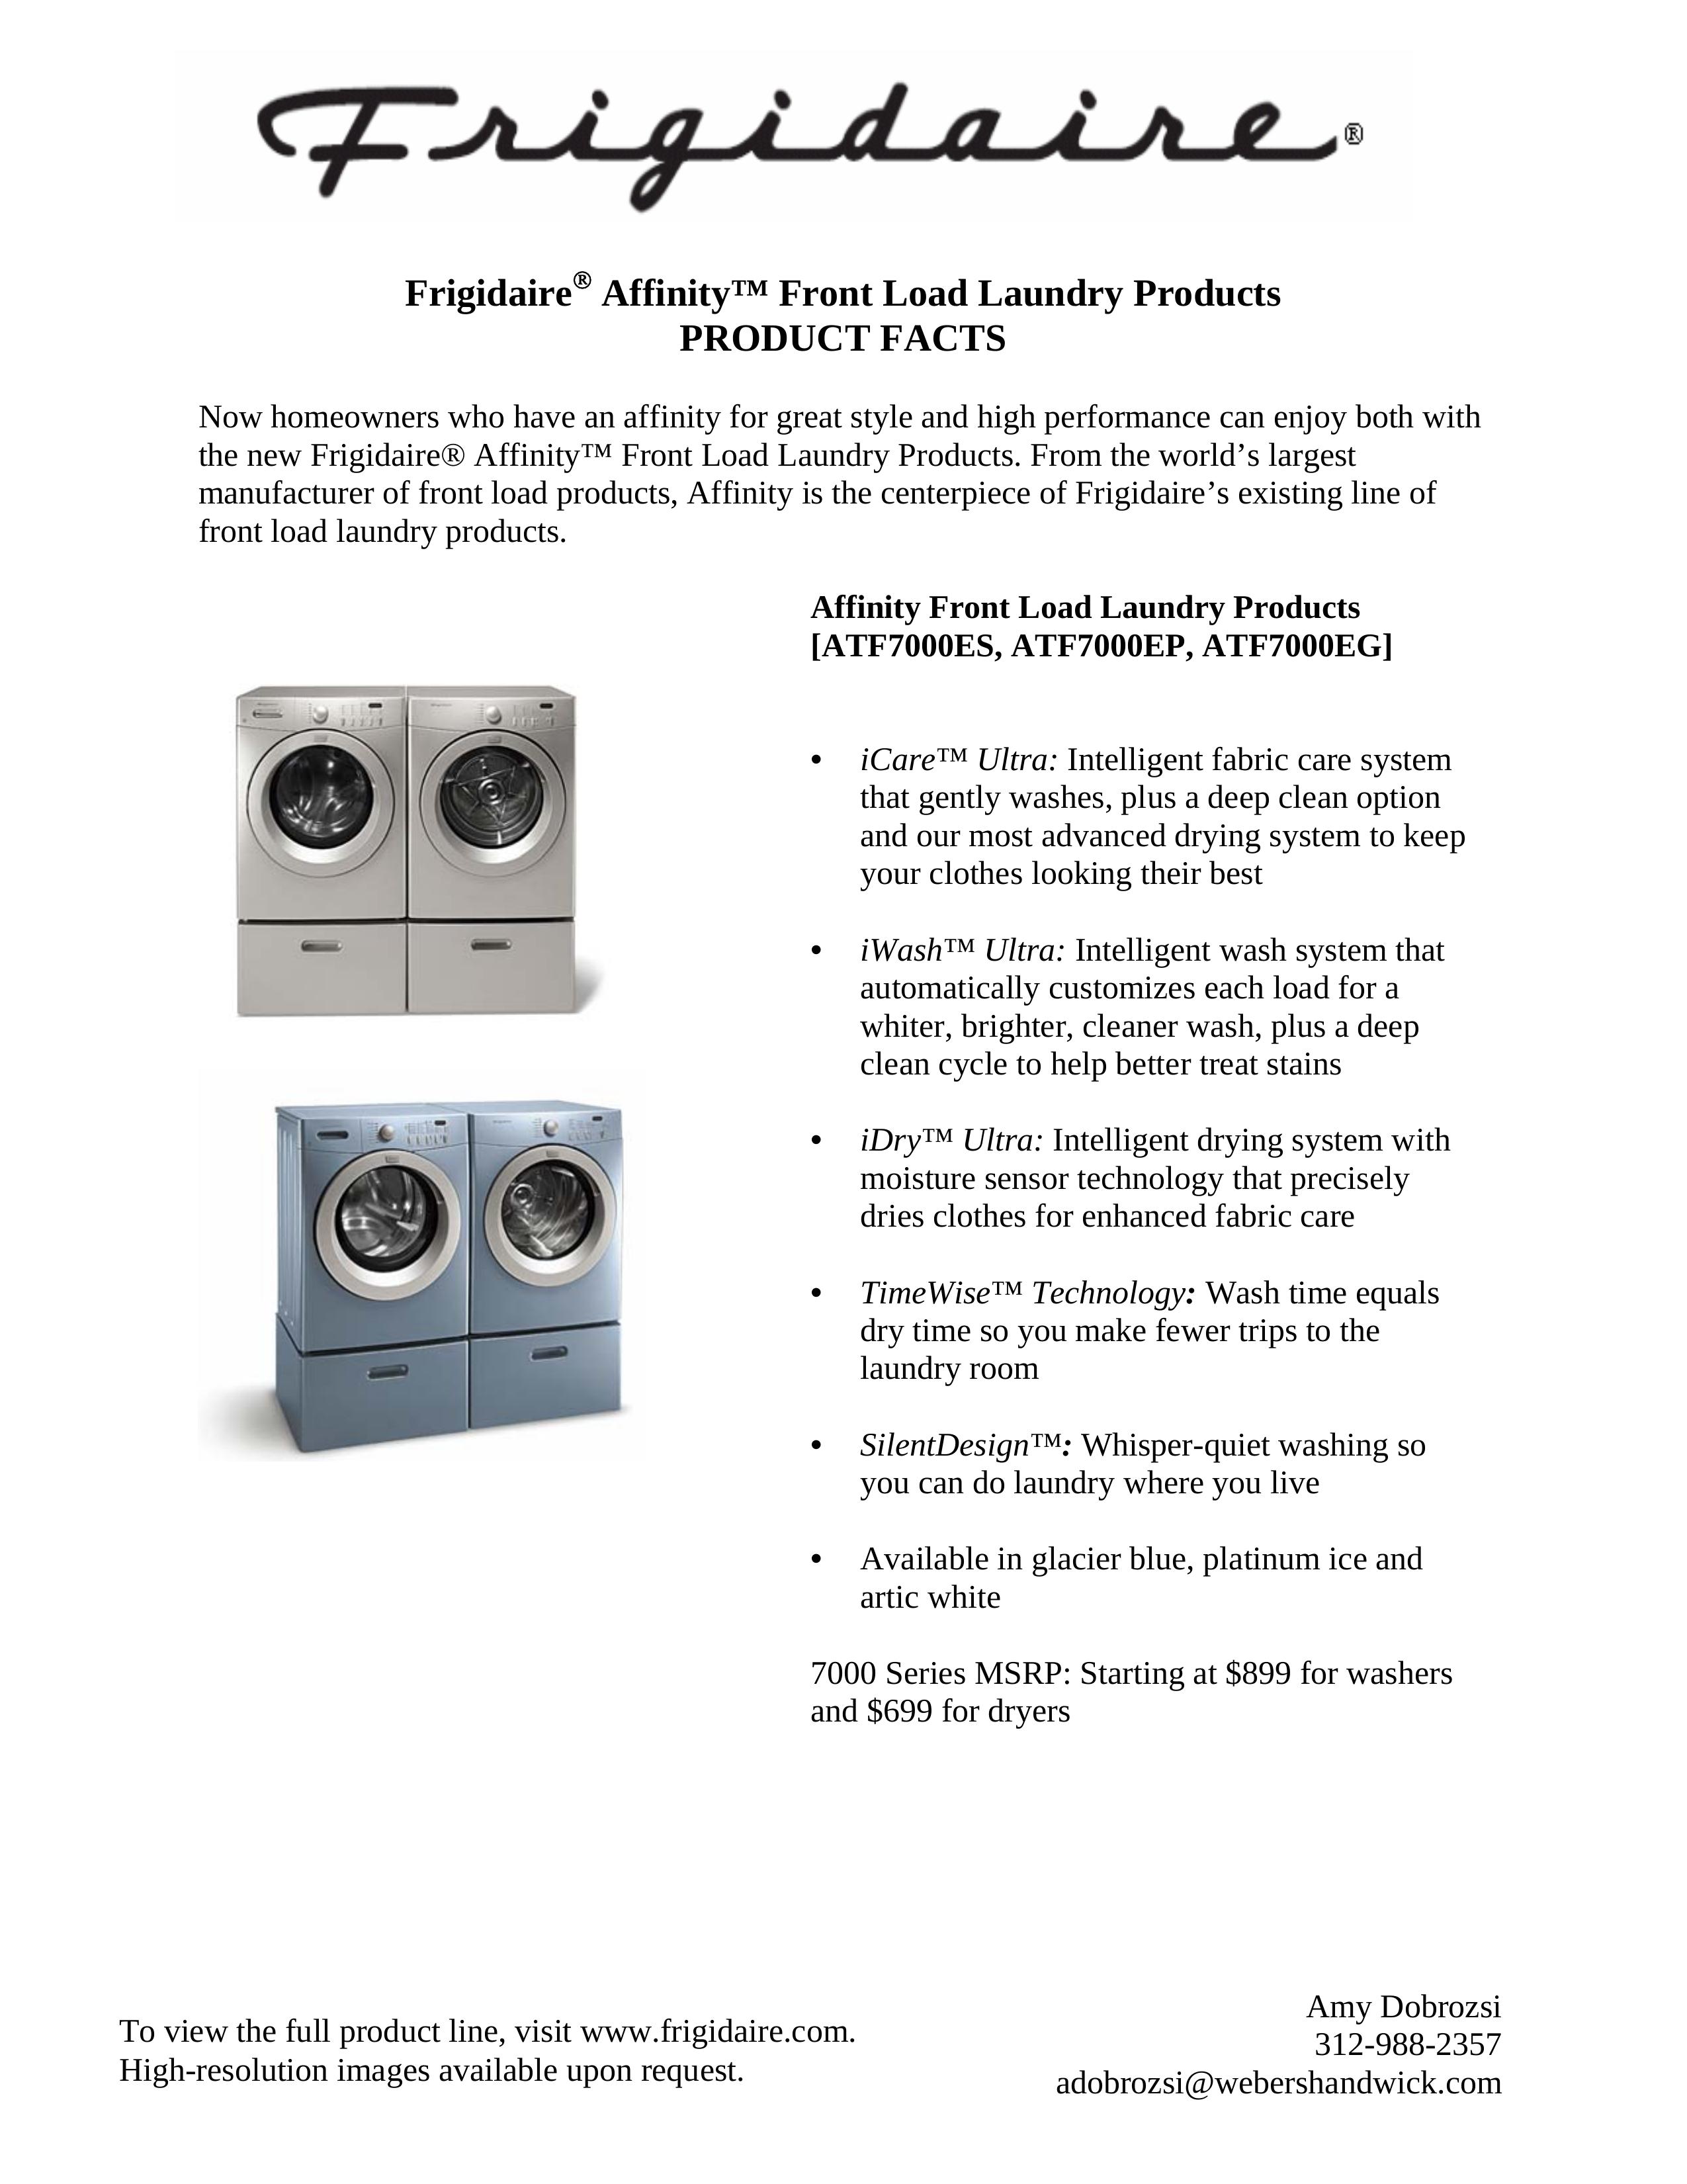 Frigidaire atf7000es Washer User Manual